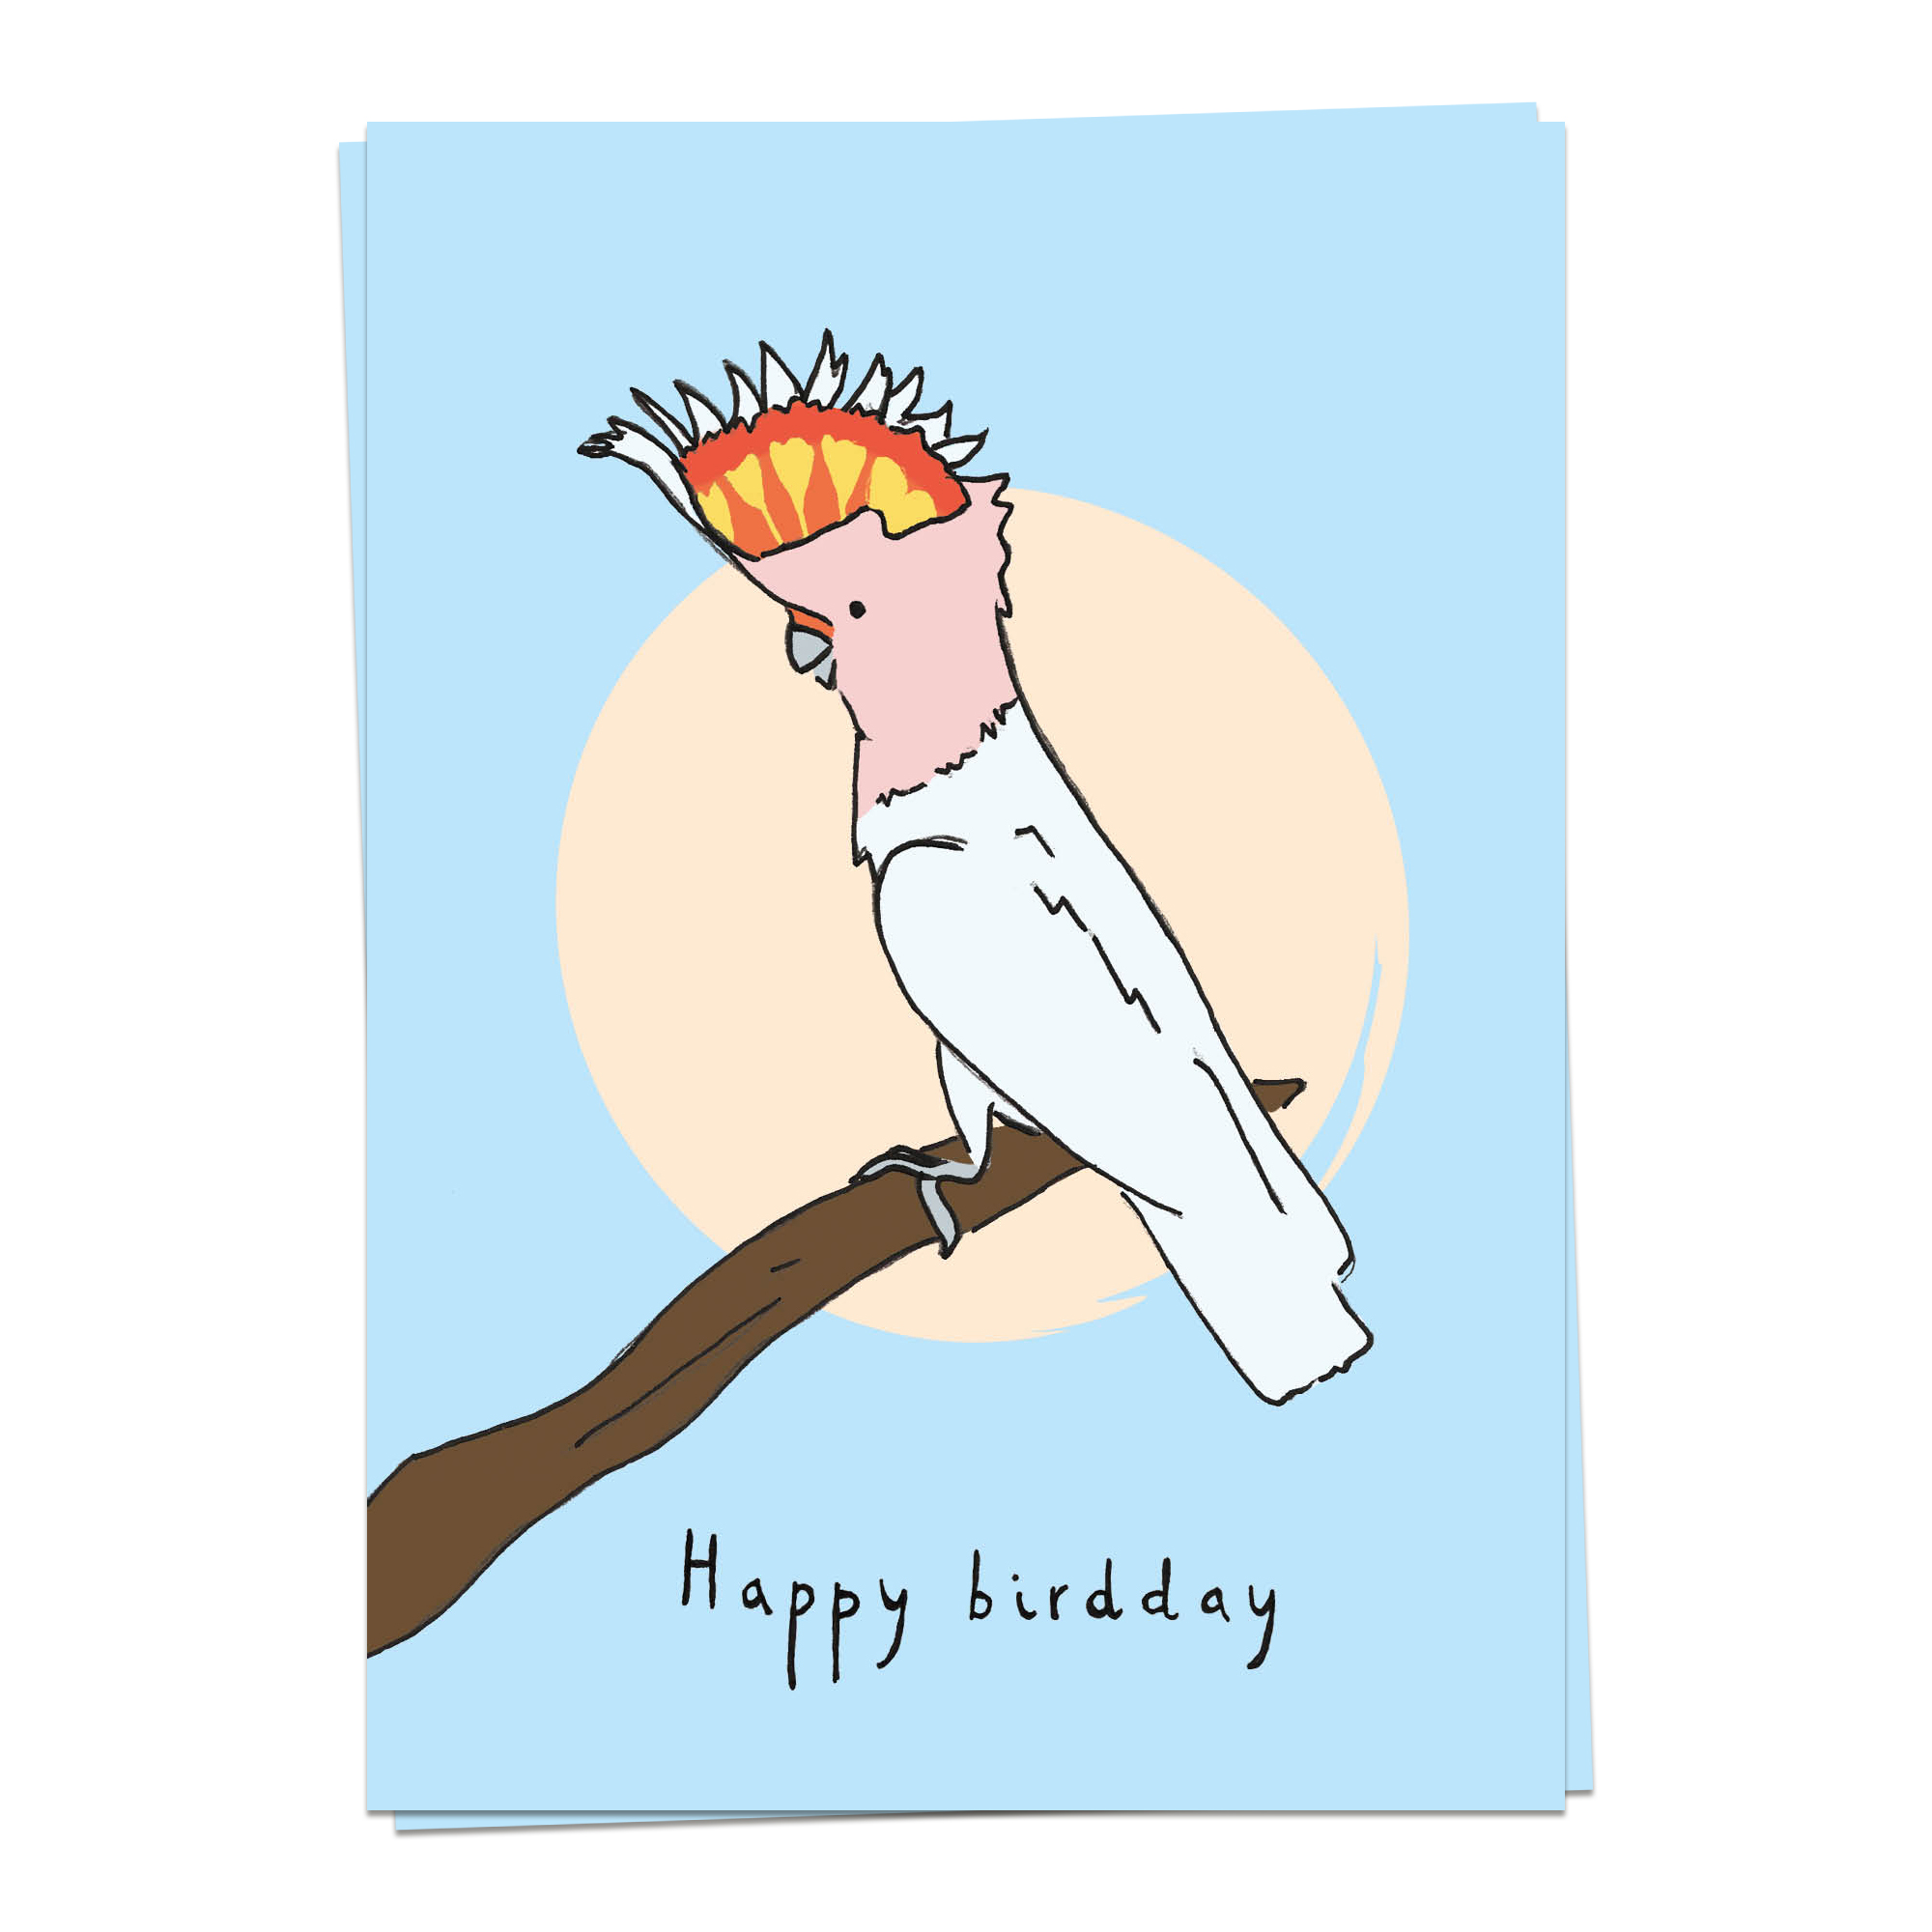 Cardimals - Happy birdday